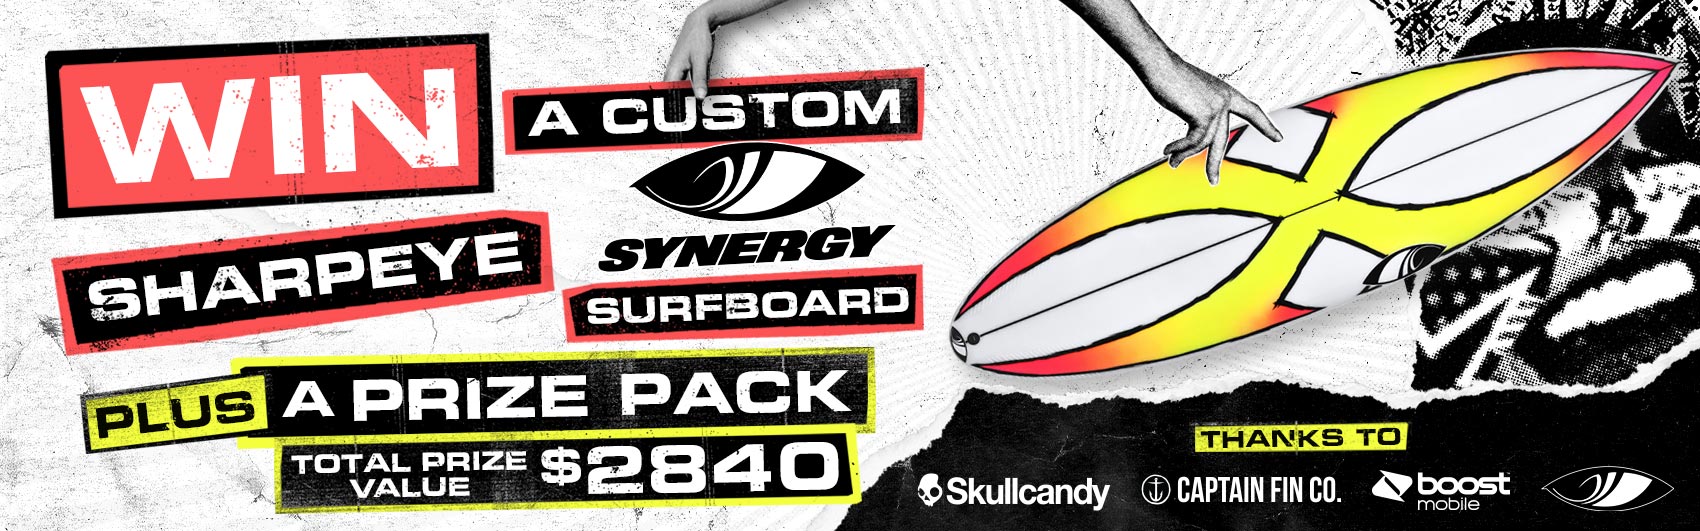 Win a custom Sharpeye Synergy Surfboard